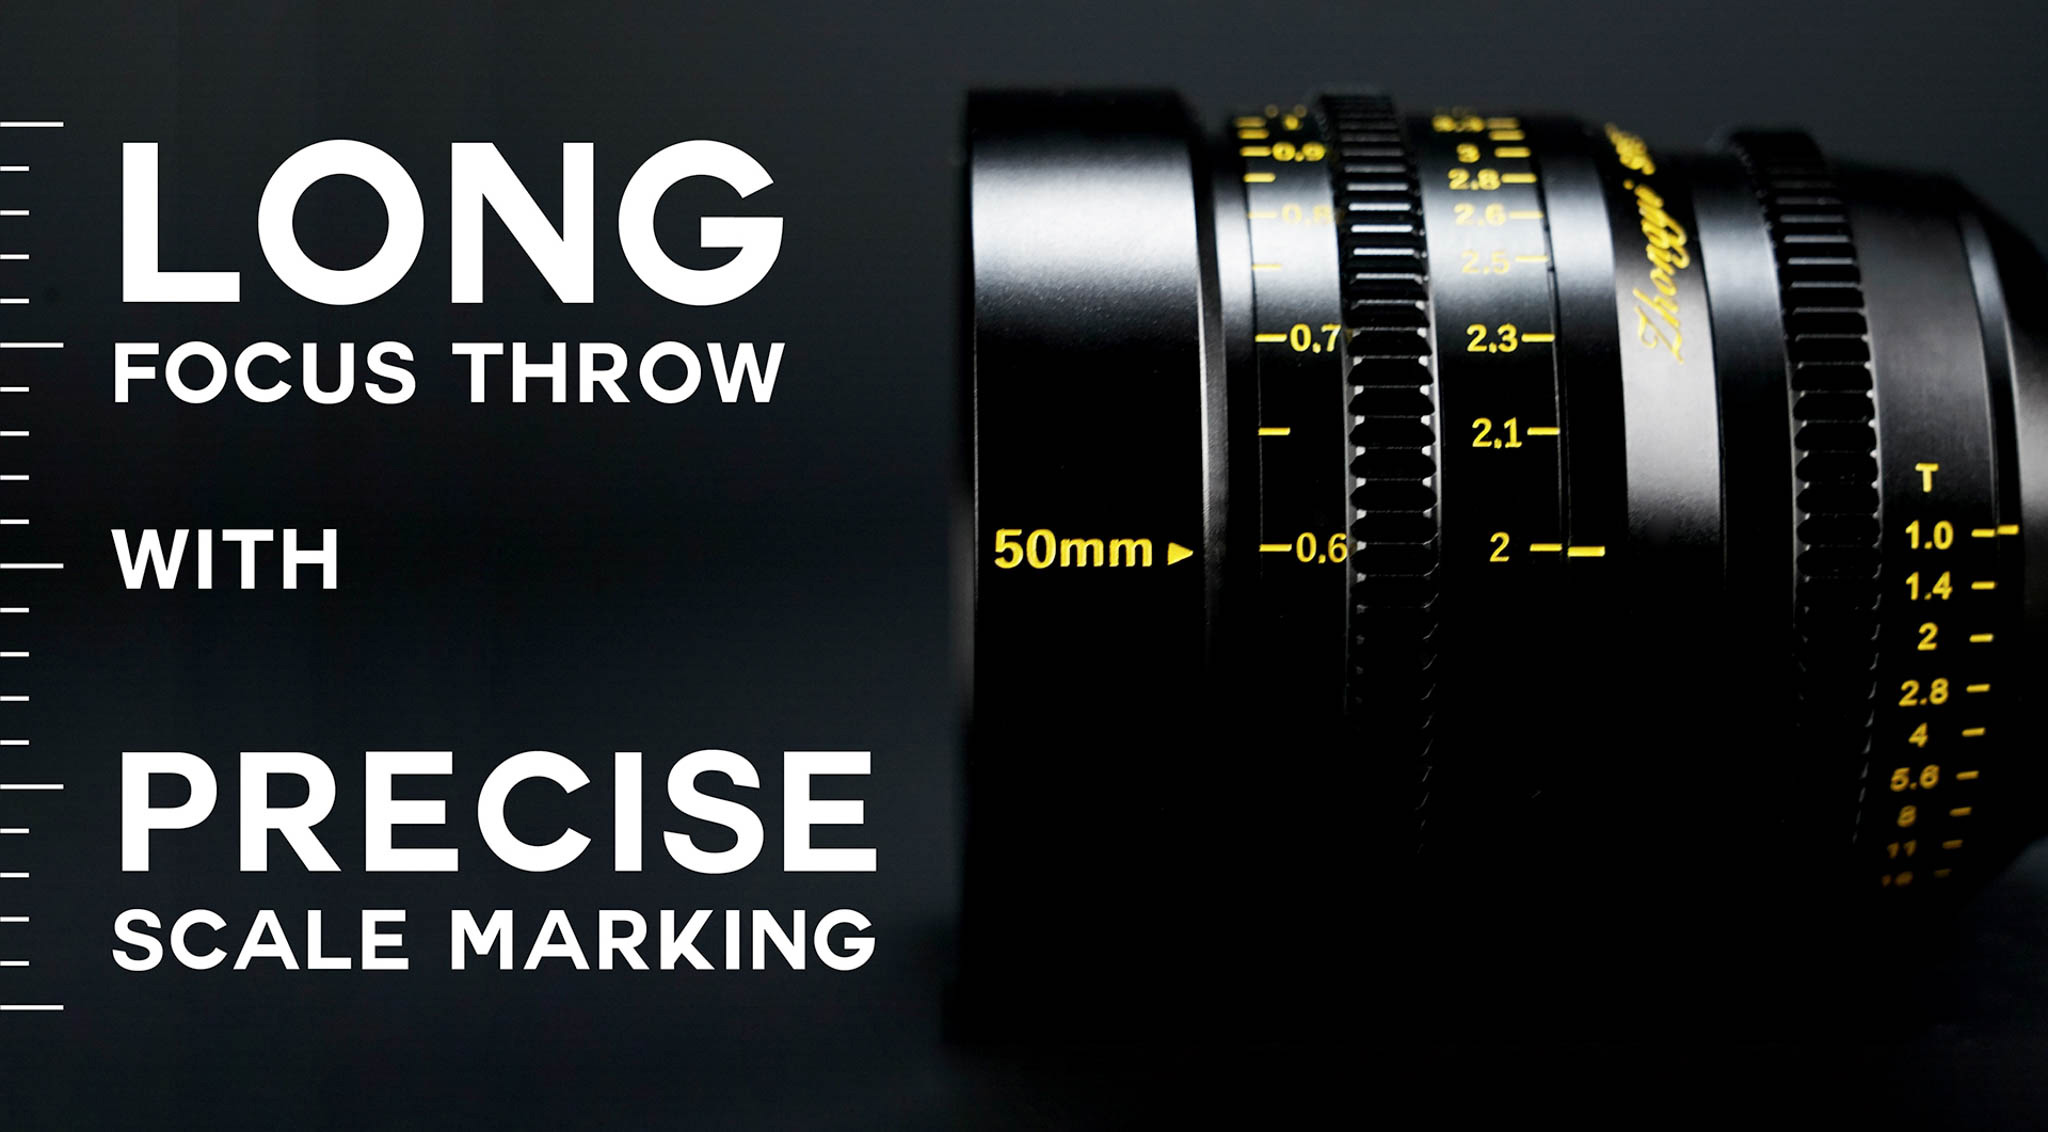 Zhong Yi Optics has a new Mitakon Speedmaster 50mm T1 Cine lens for MTF